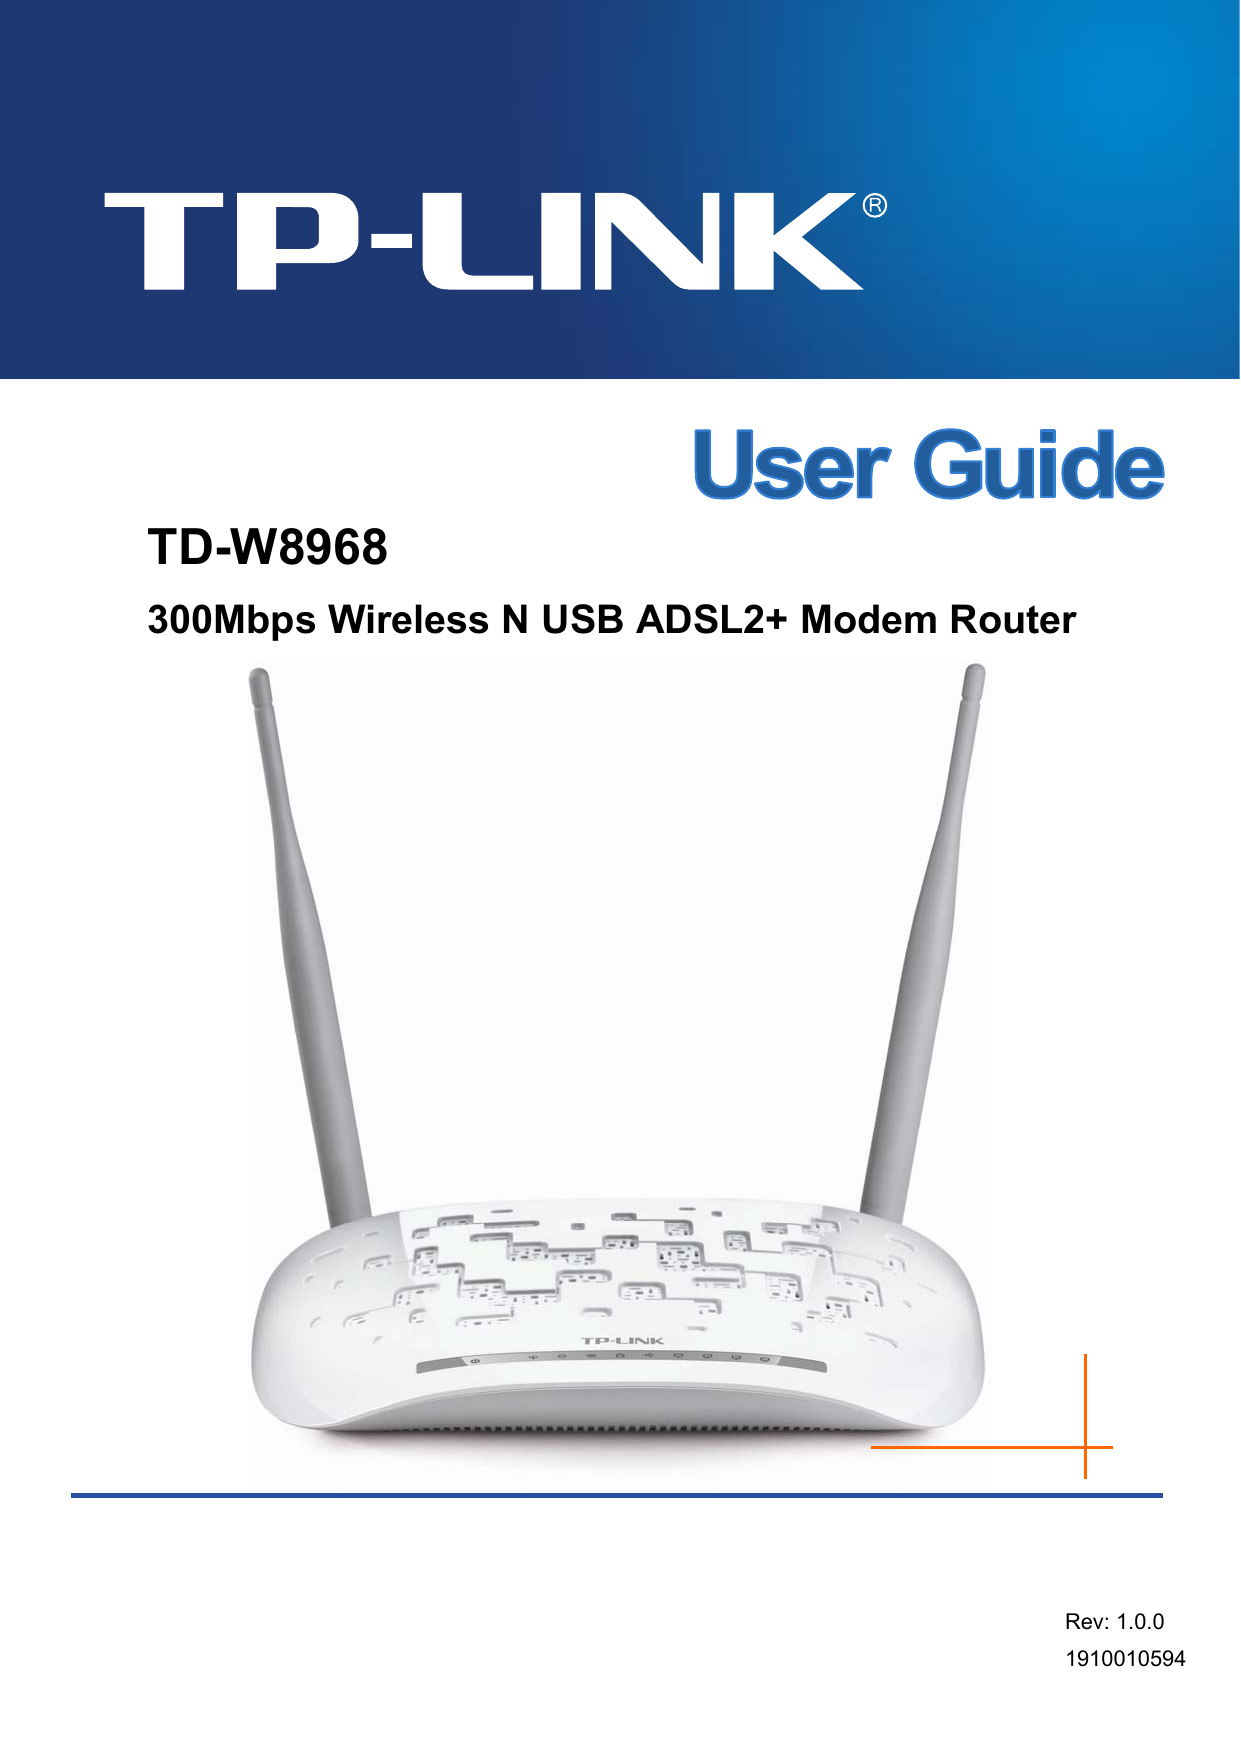    TD-W8968 300Mbps Wireless N USB ADSL2+ Modem Router 1910010594 Rev: 1.0.0 